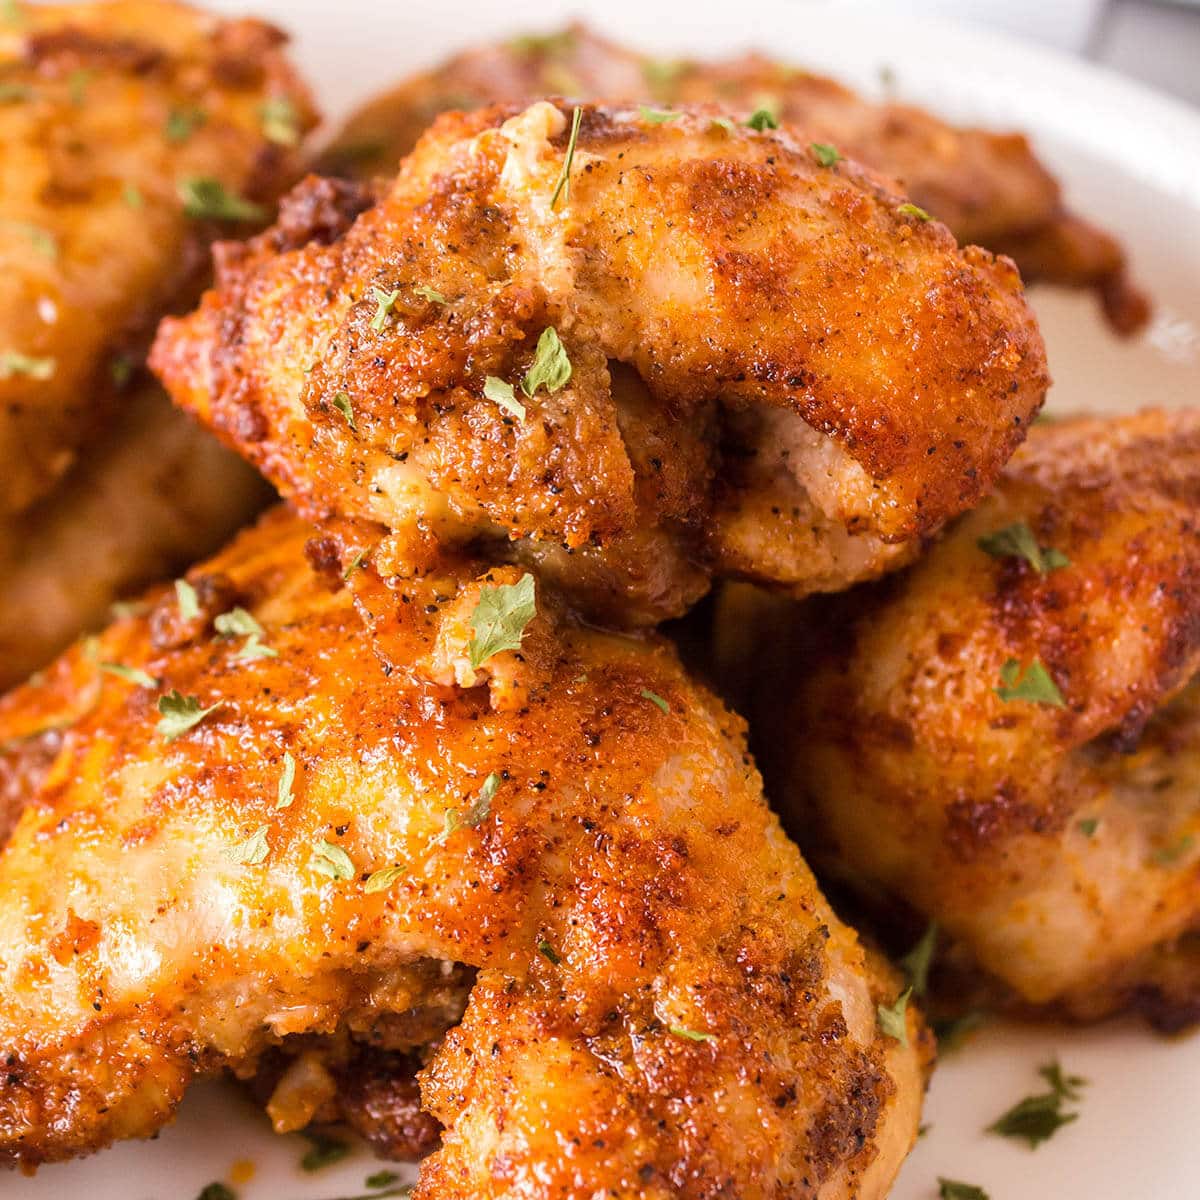 Boneless chicken thighs cooked in air fryer on platter.